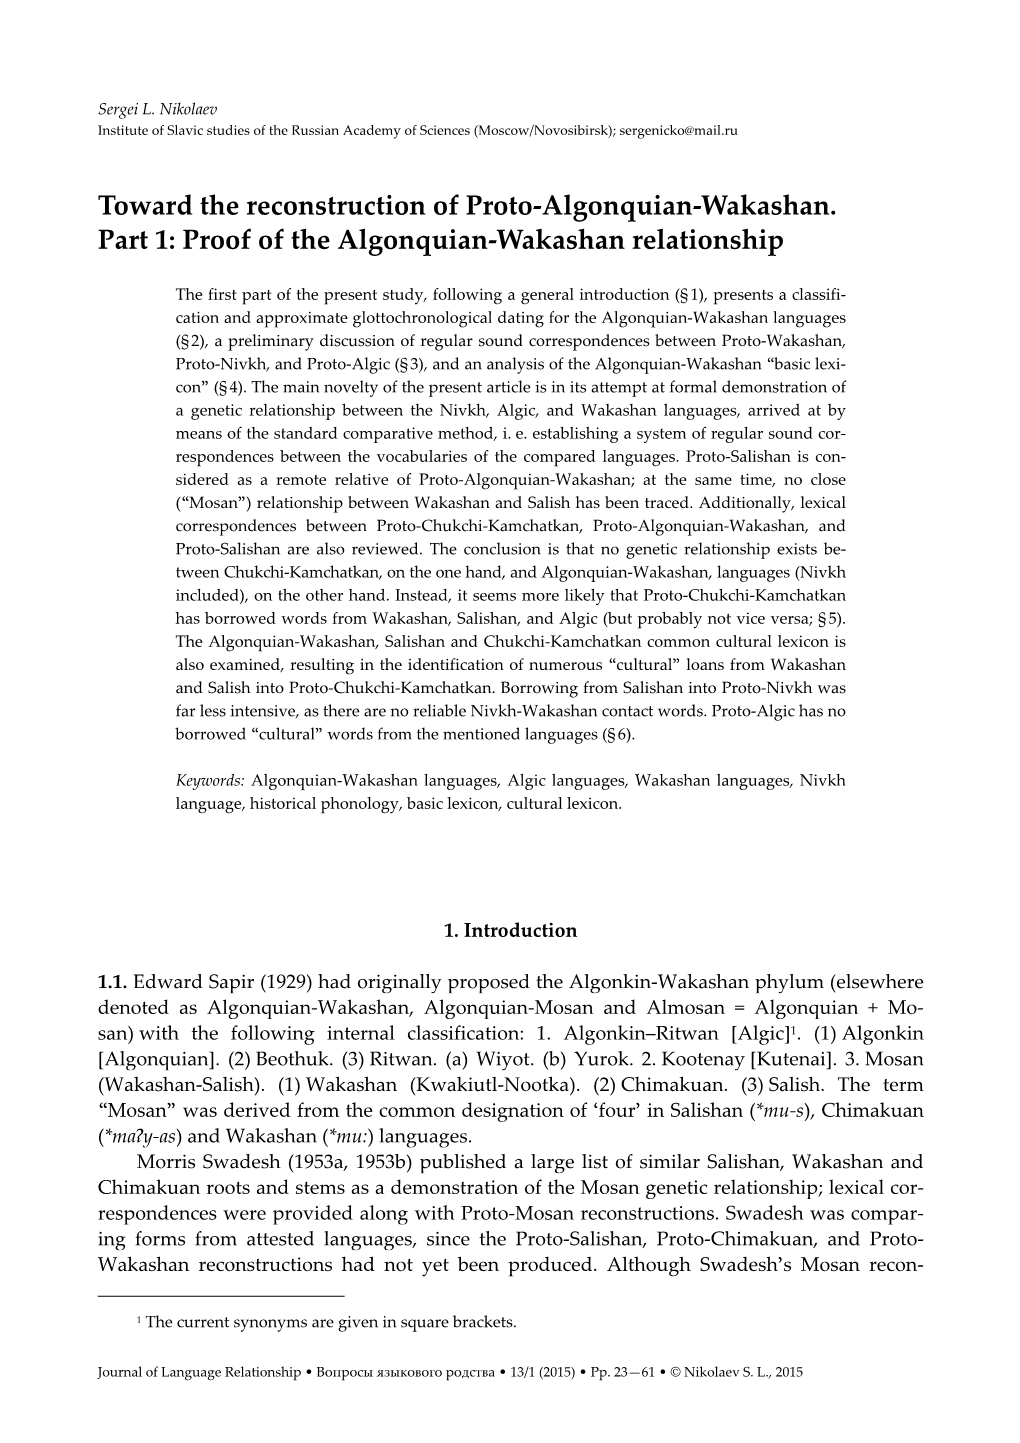 Toward the Reconstruction of Proto-Algonquian-Wakashan. Part 1: Proof of the Algonquian-Wakashan Relationship